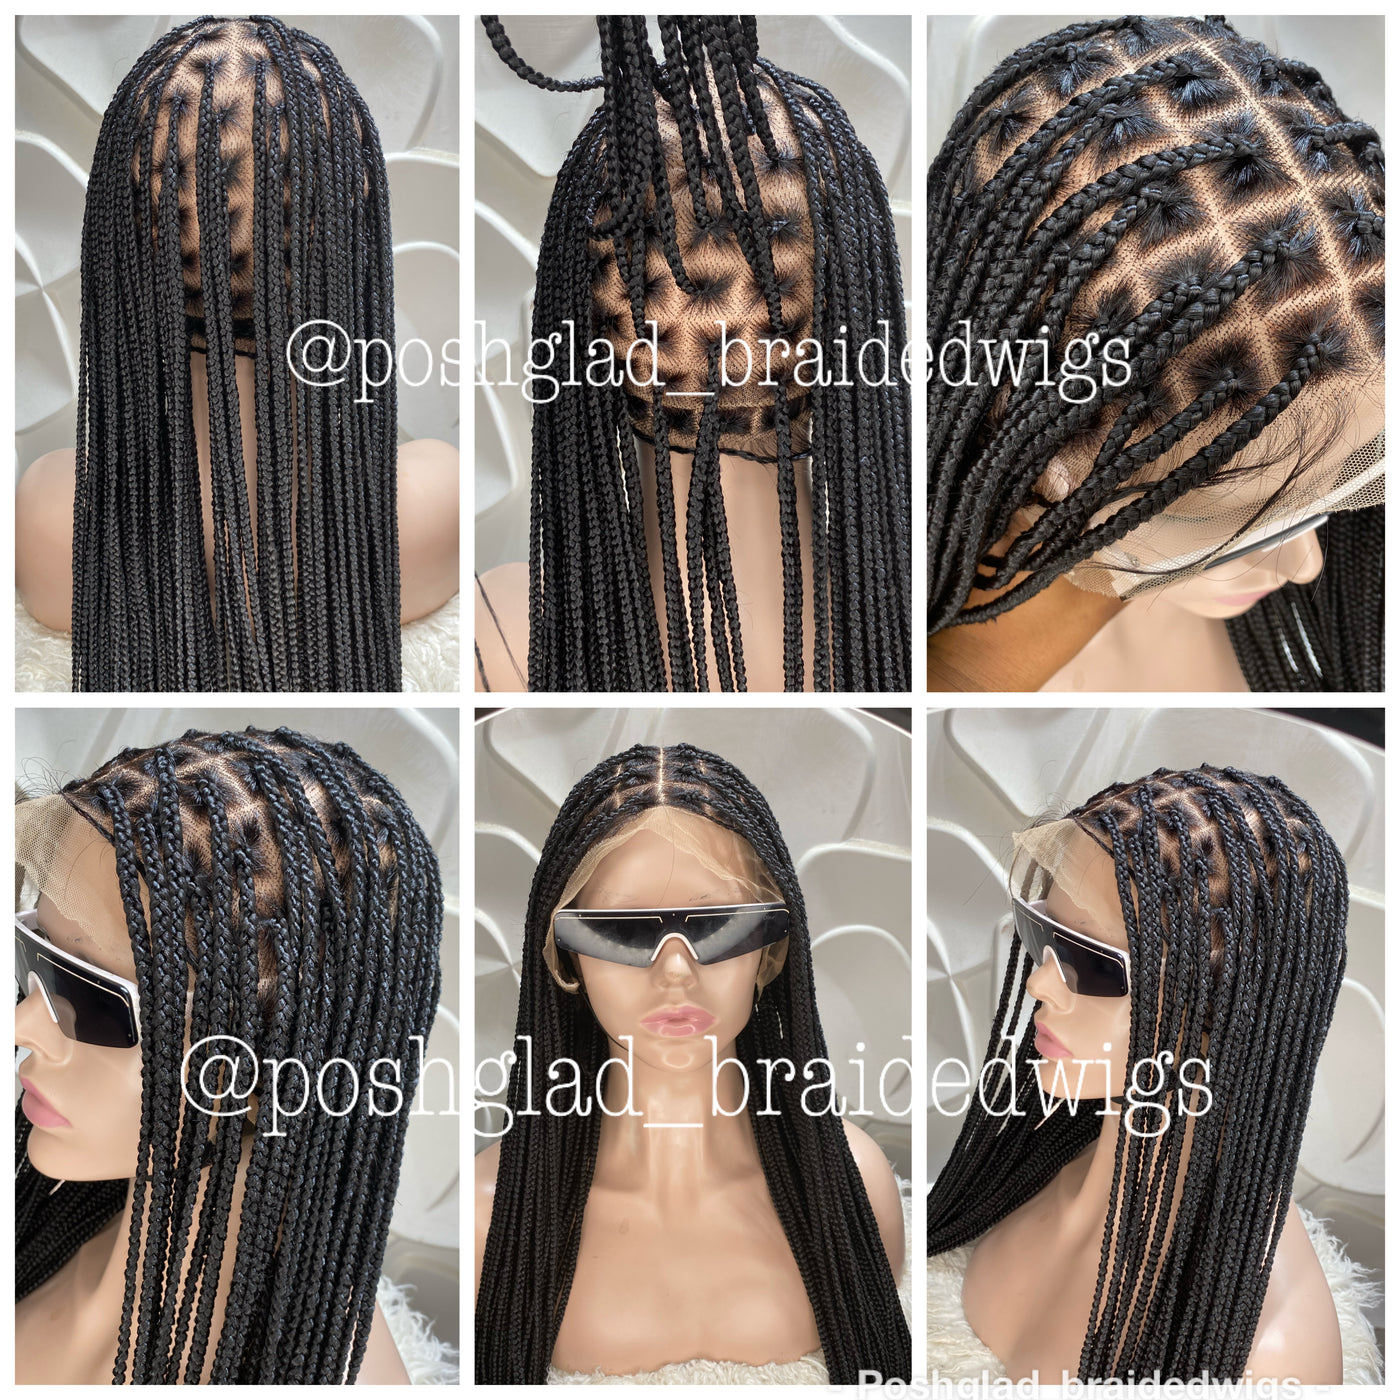 HD Knotless Braid - Full Lace Wig - Bridget Poshglad Braided Wigs Knotless Braid Wig